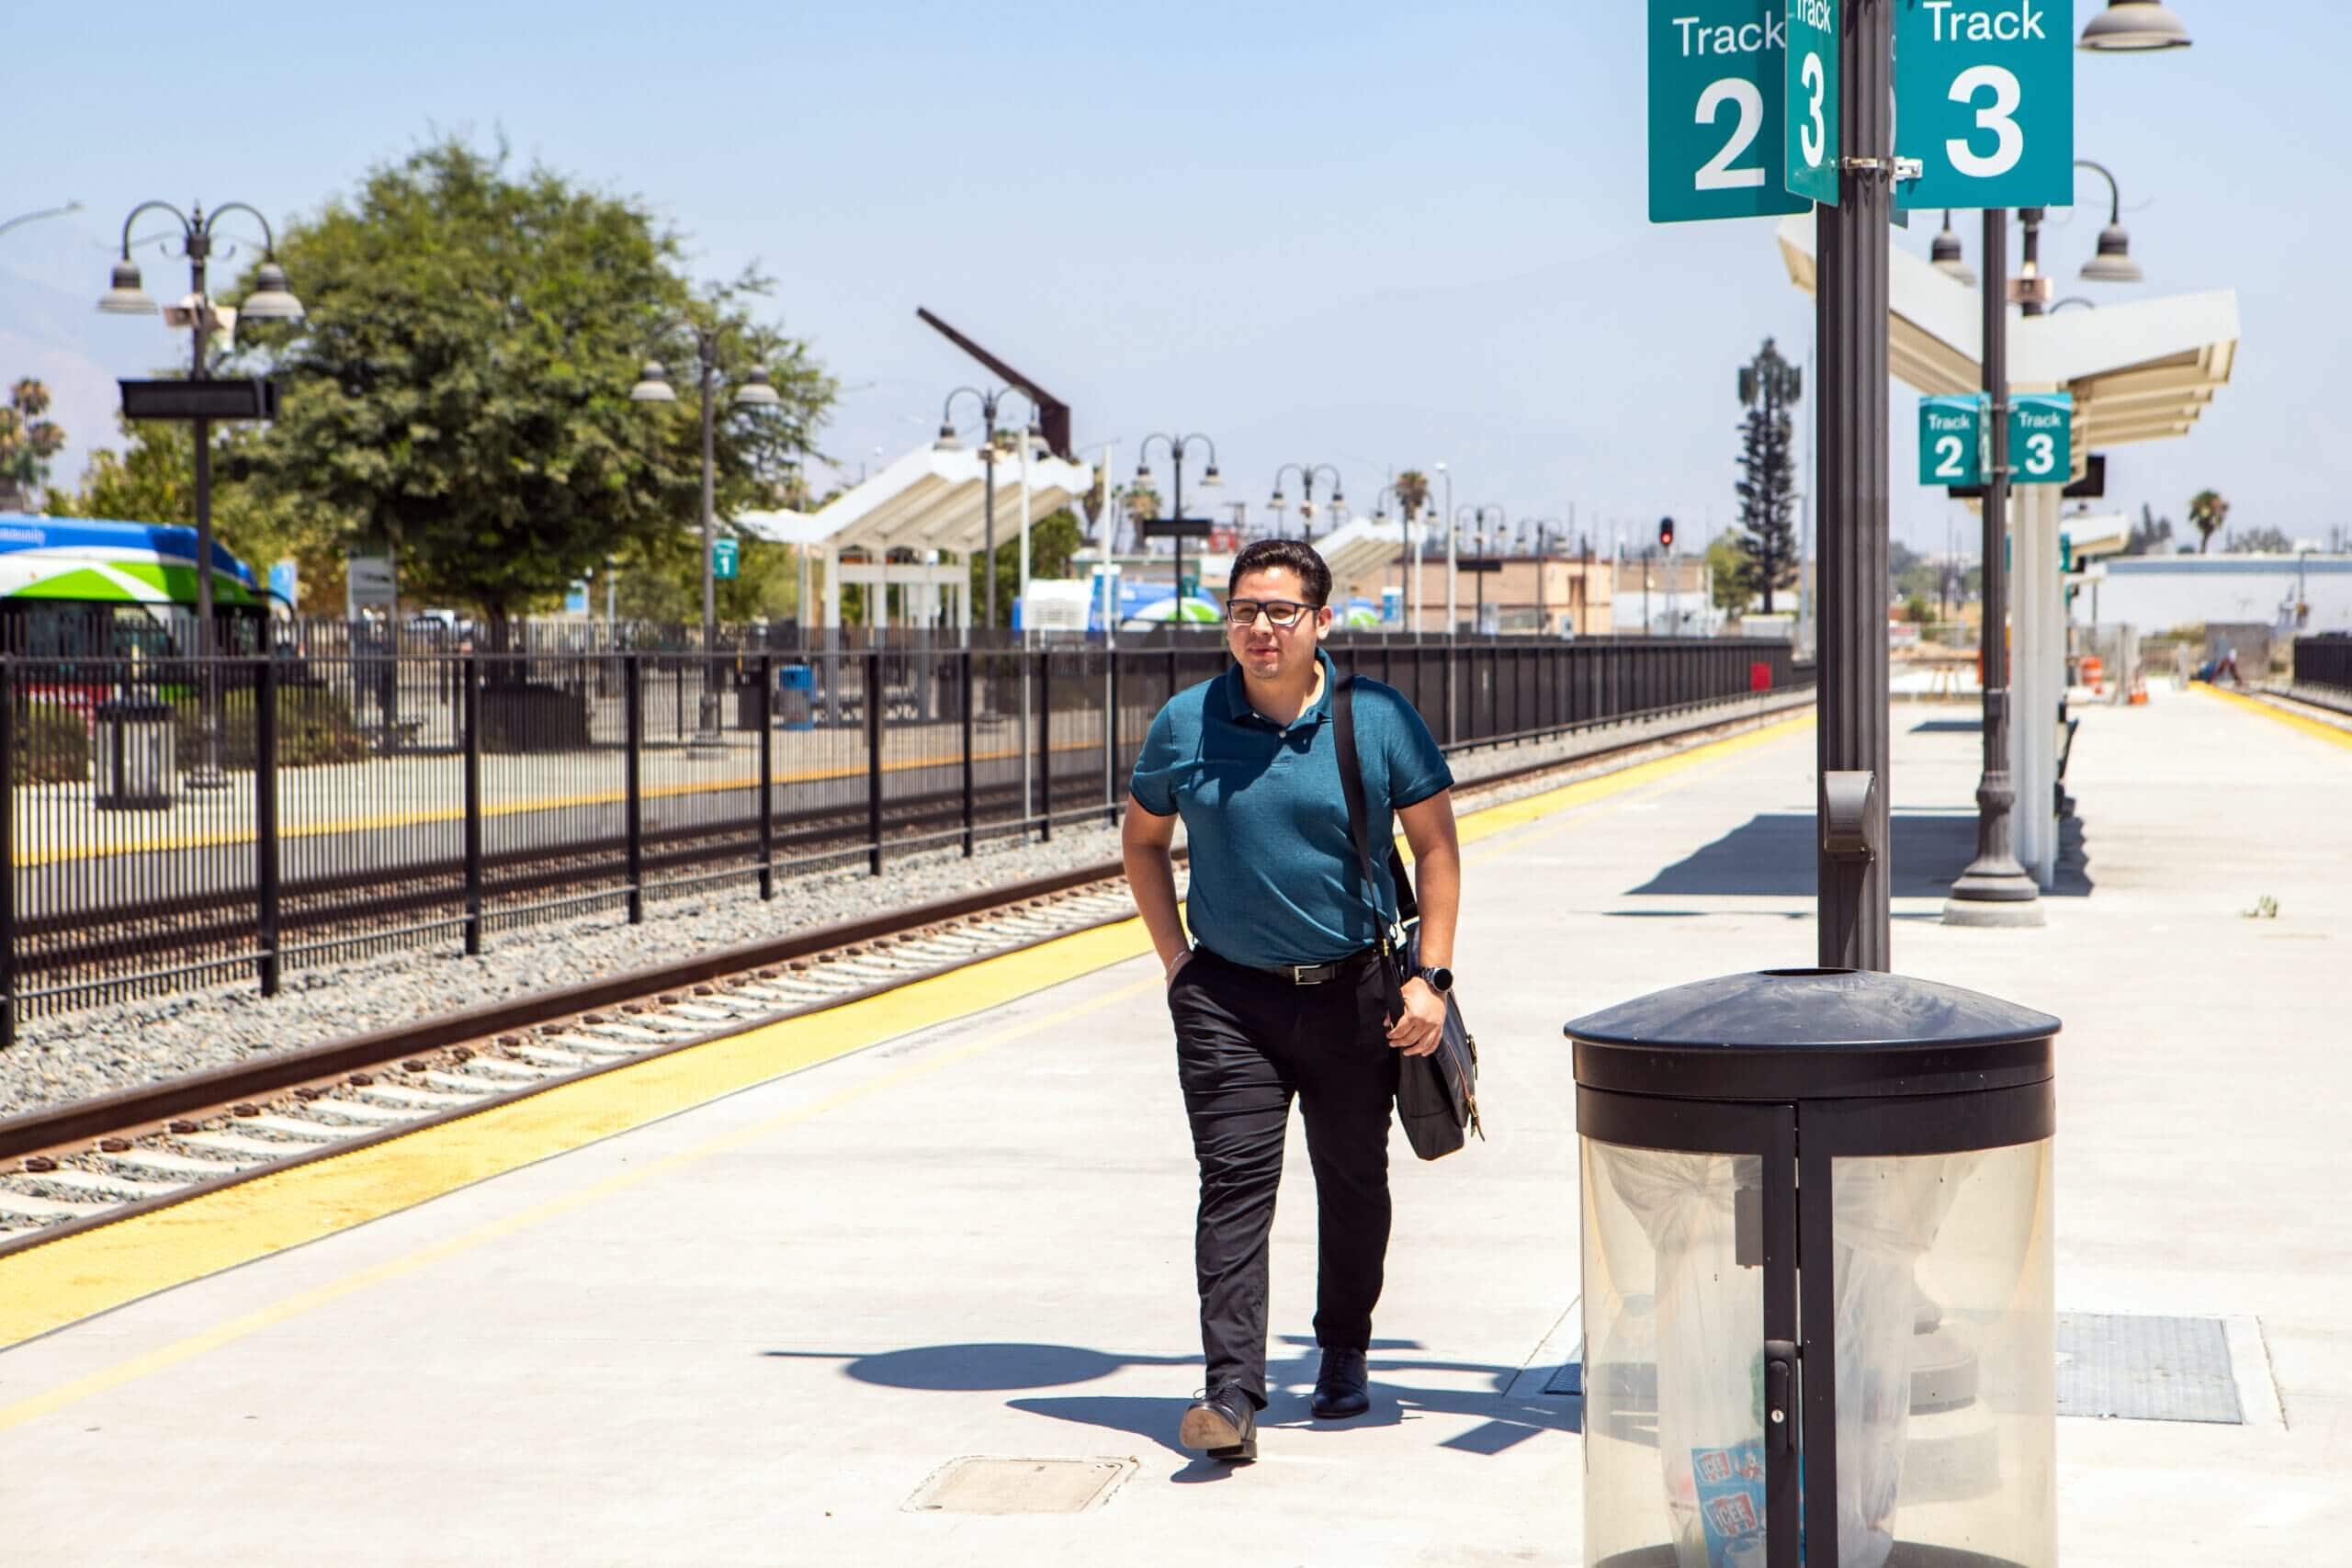 Image of man with messenger bag walking next to train tracks